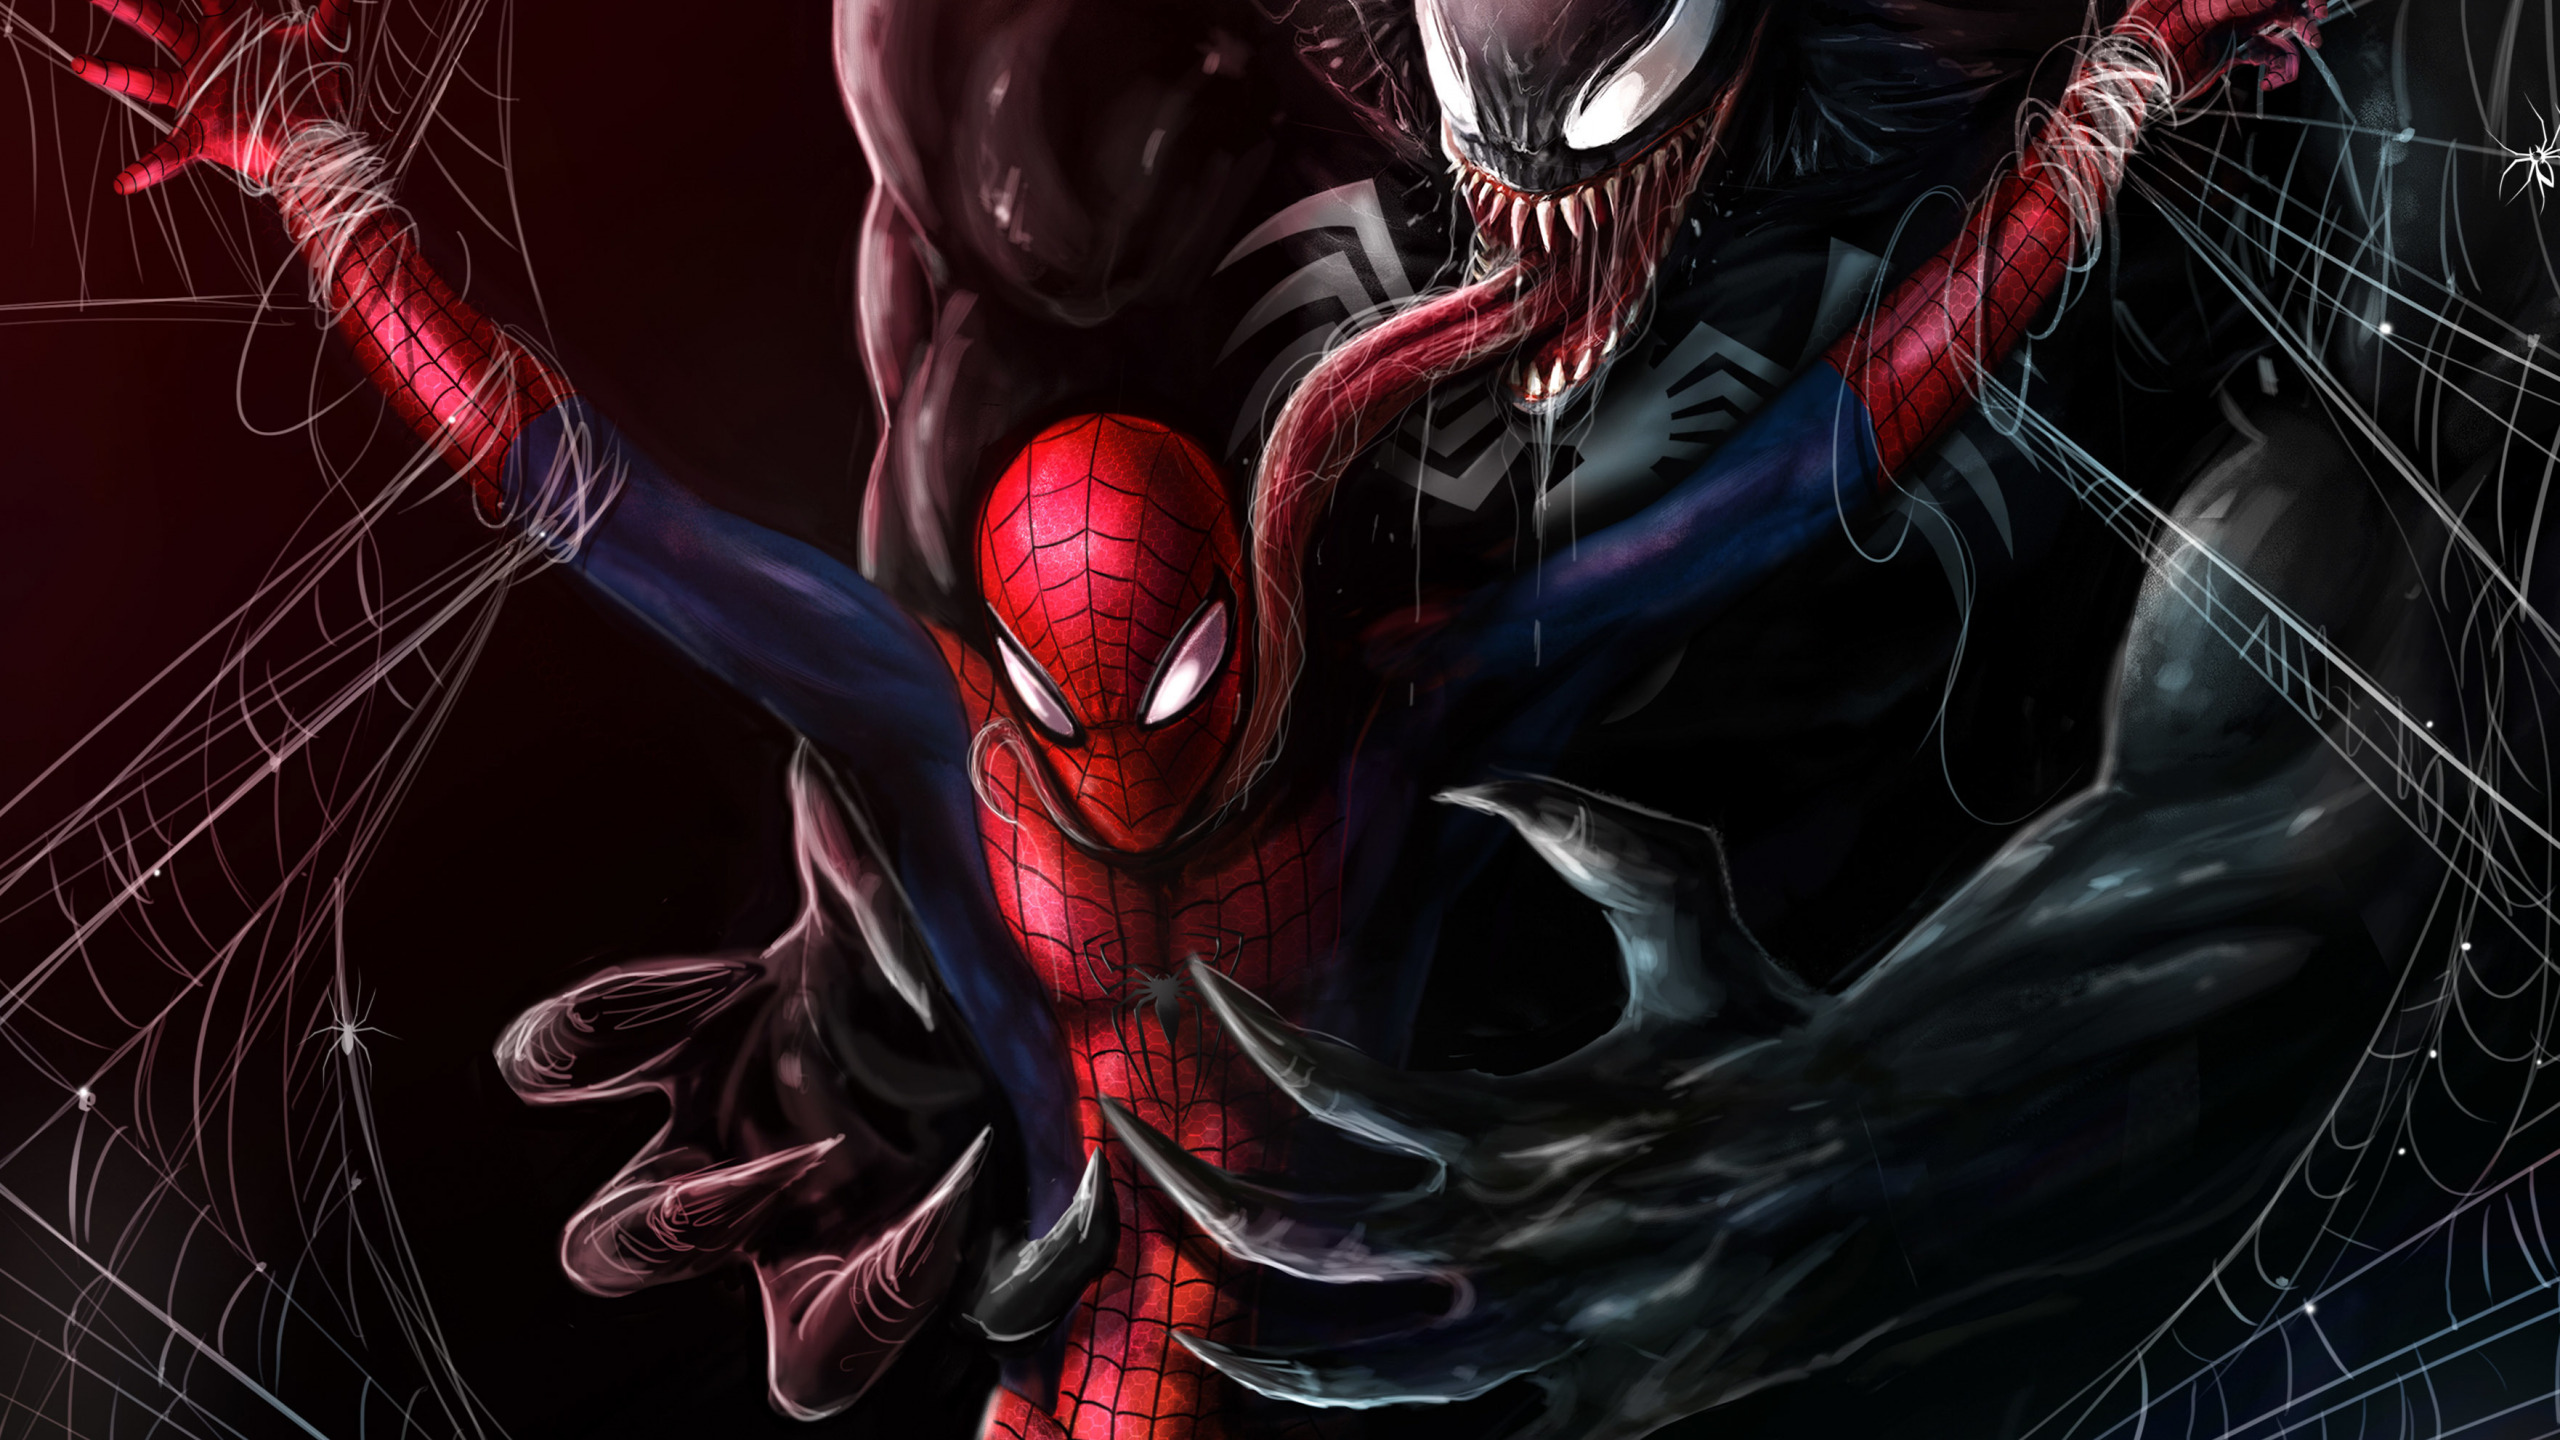 Download wallpaper Art, Fiction, Marvel, Venom, Venom, Spider Man, Symbiote, section fantasy in resolution 2560x1440